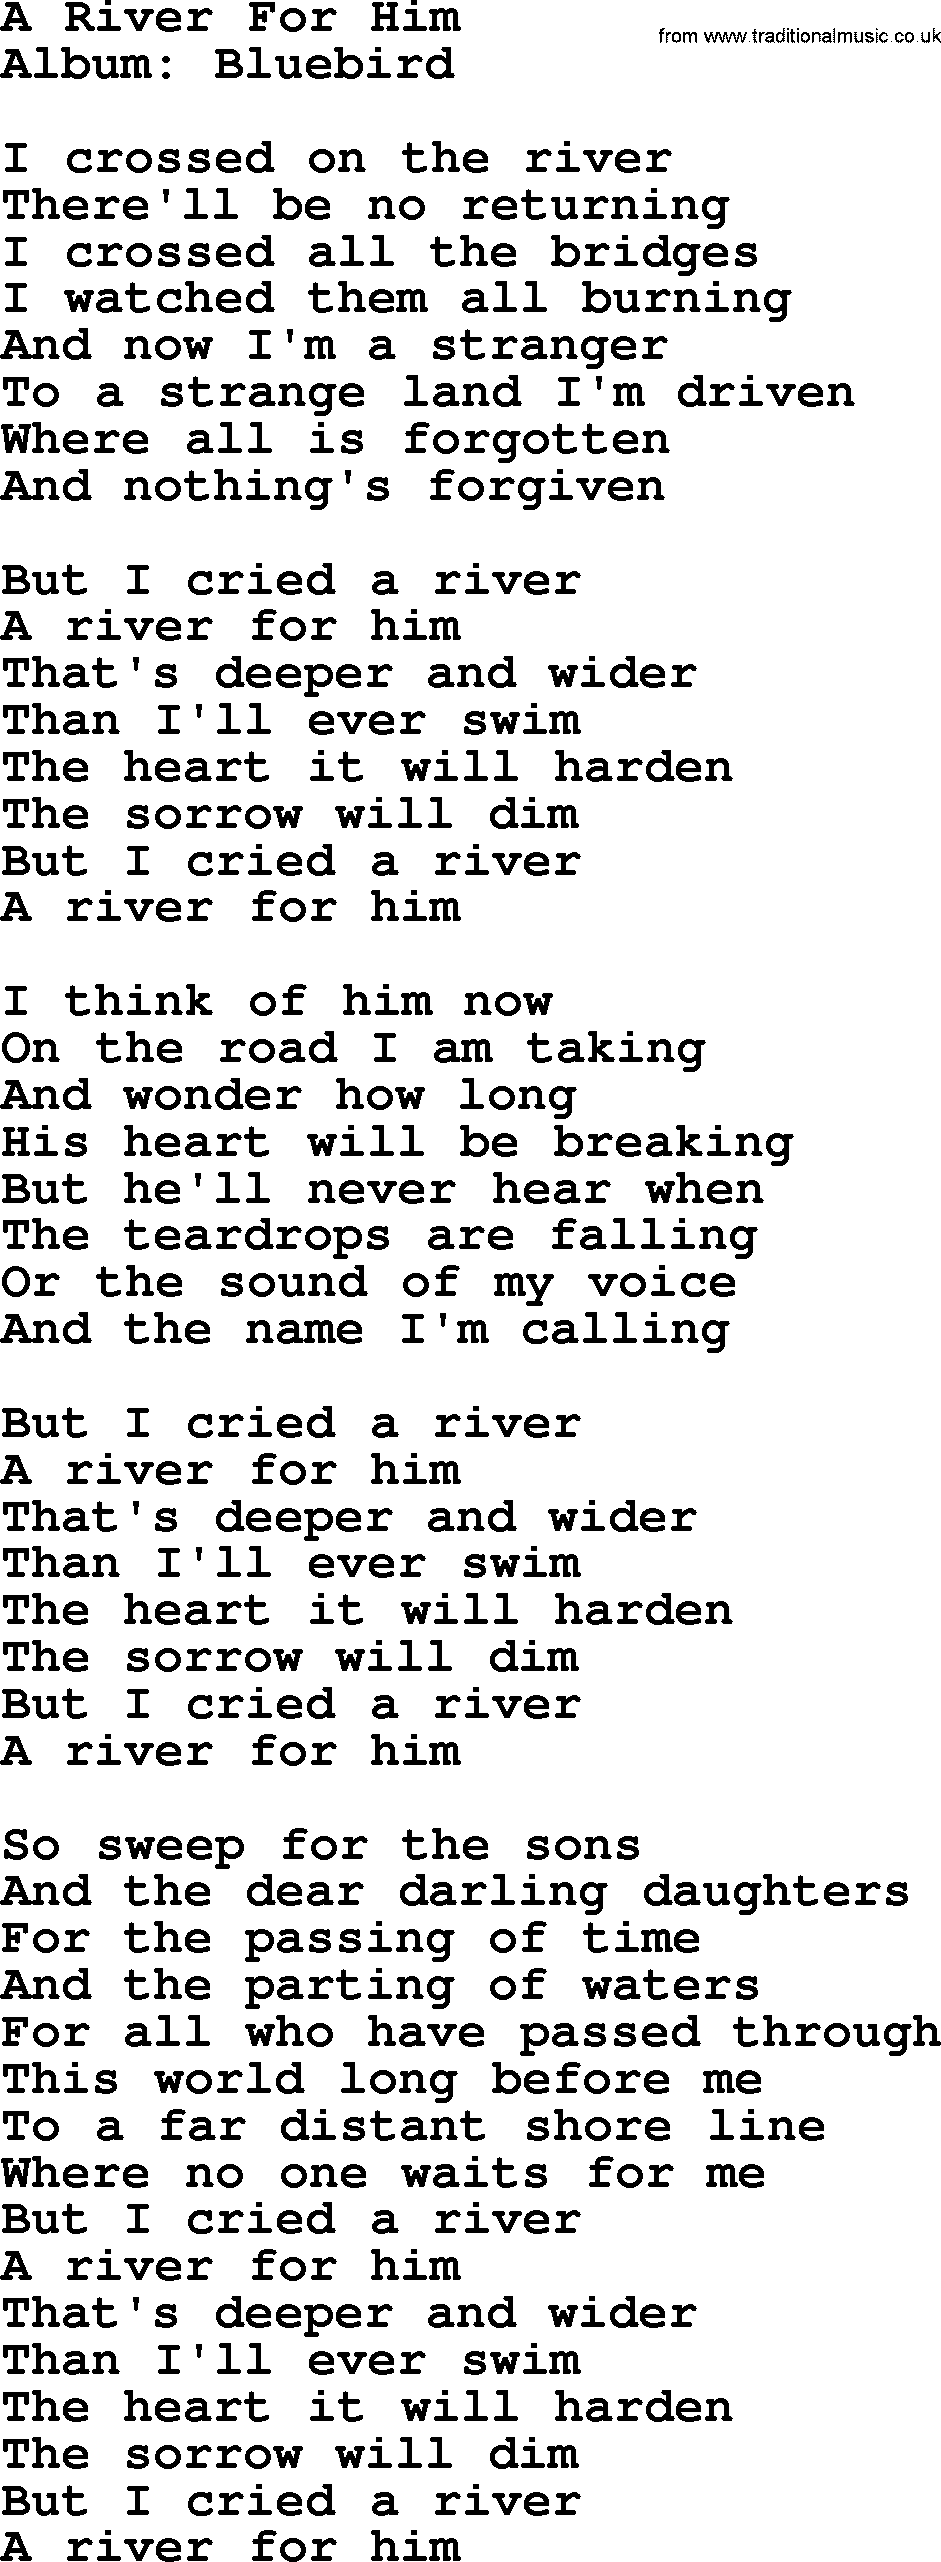 Emmylou Harris song: A River For Him lyrics